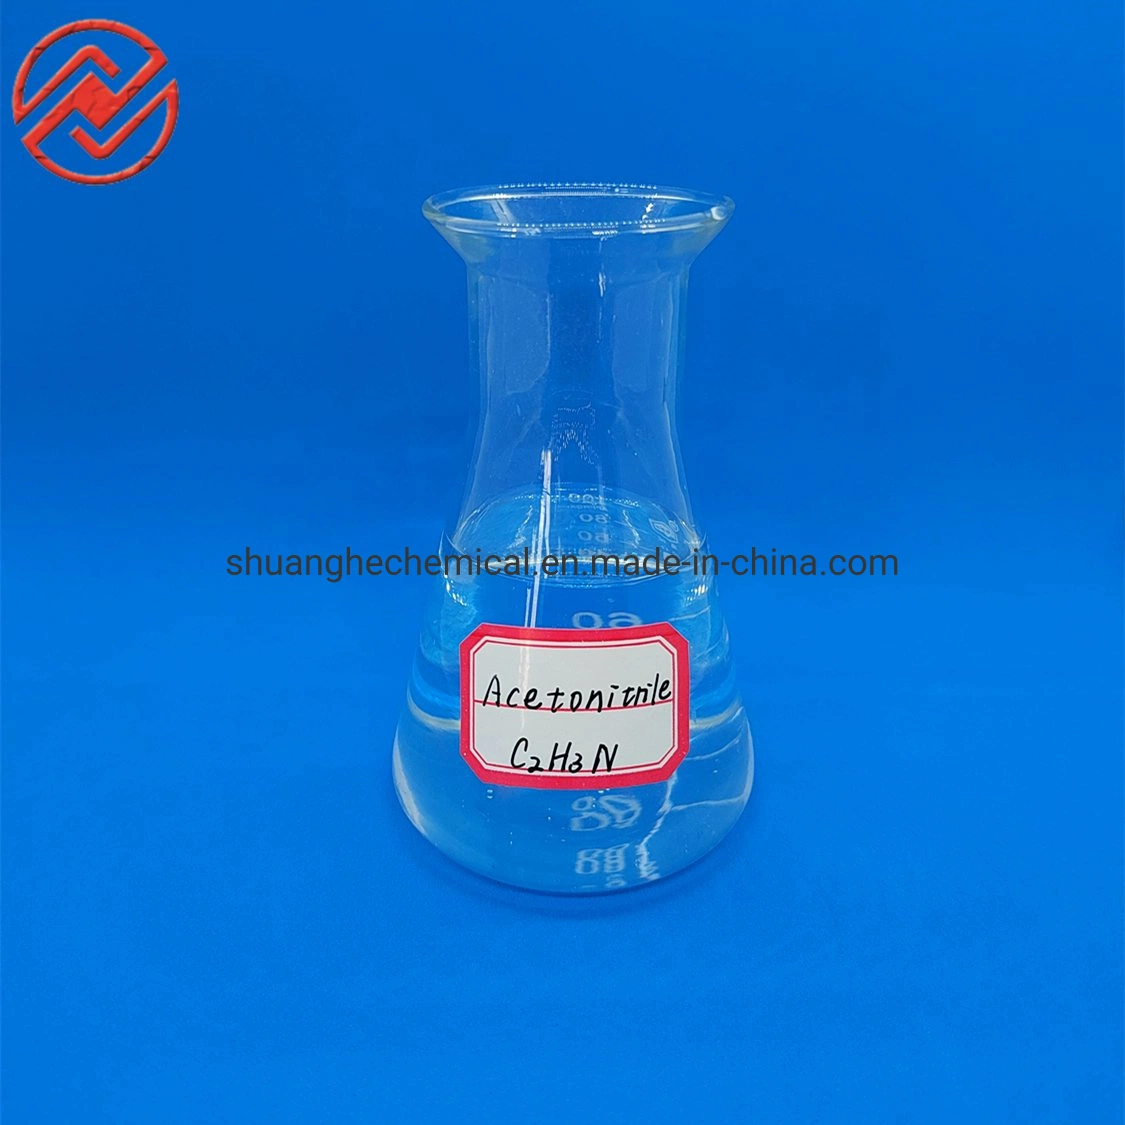 CAS 75-05-8 Cianuro de metilo líquido transparente incoloro an/acetonitrilo de chino Fabricante superior